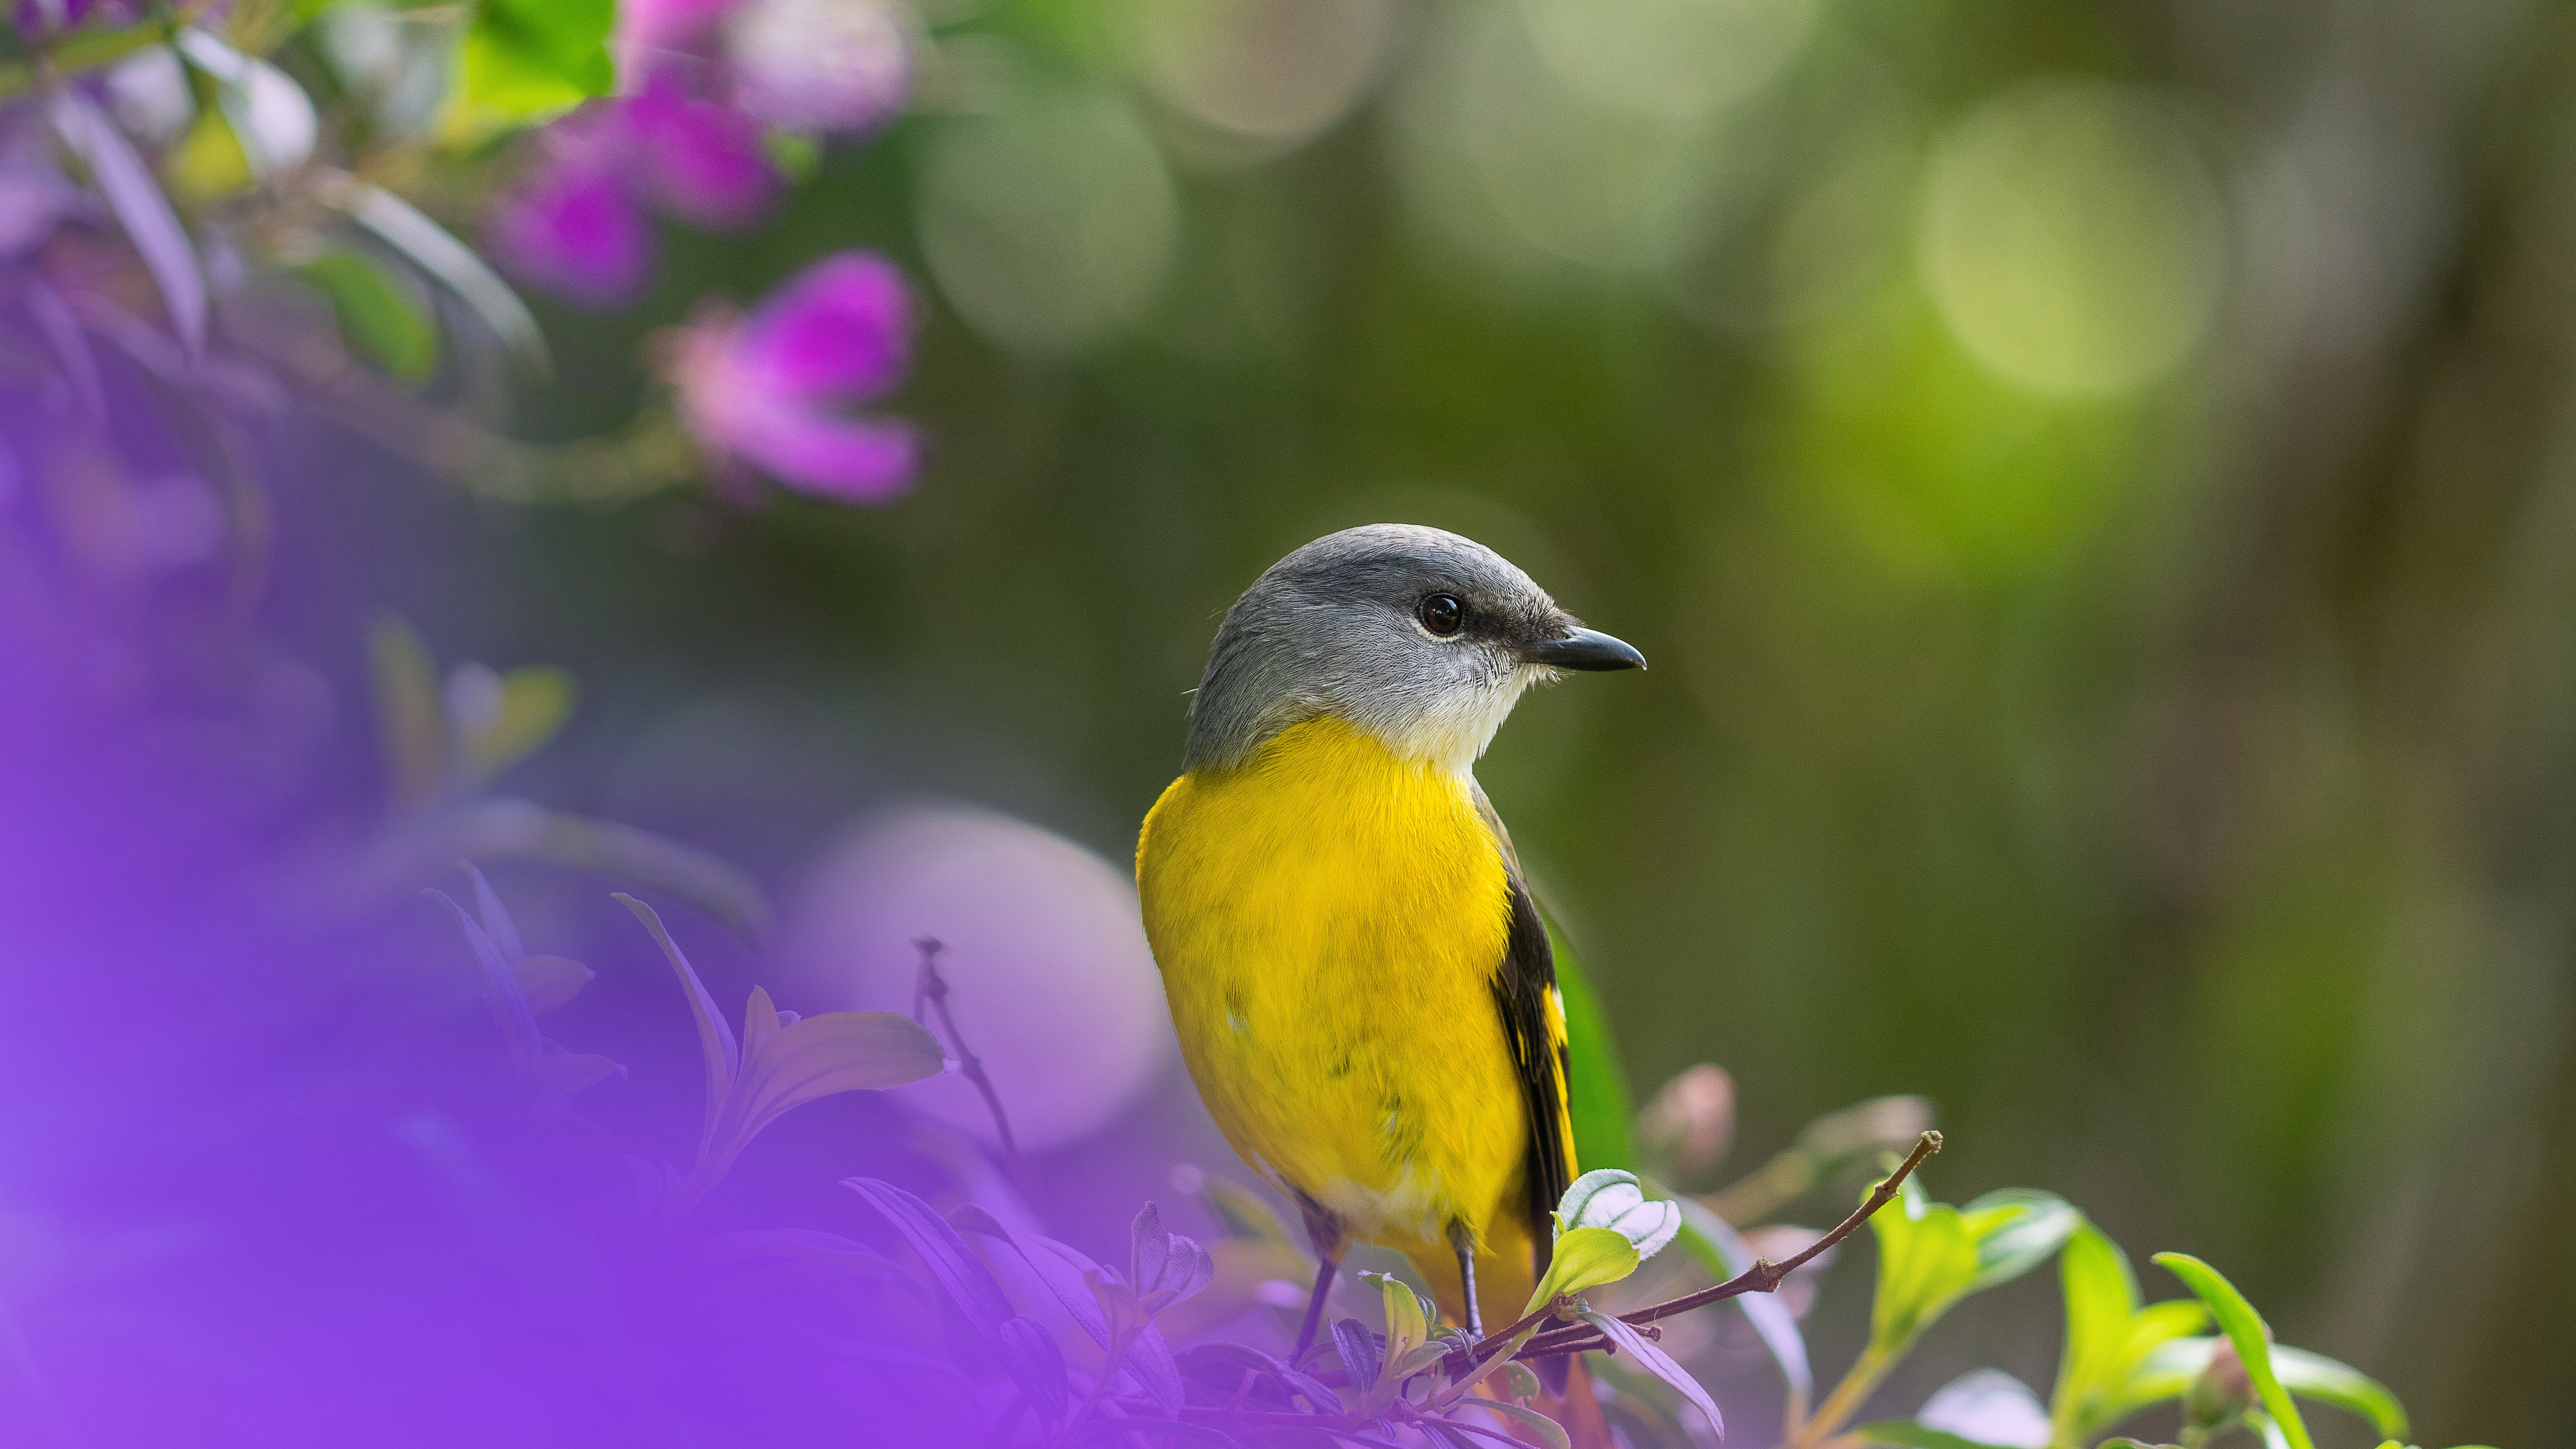 Bokeh Yellow Ash Bird On Tree Branch In Green Blur Background 4K 5K HD Birds